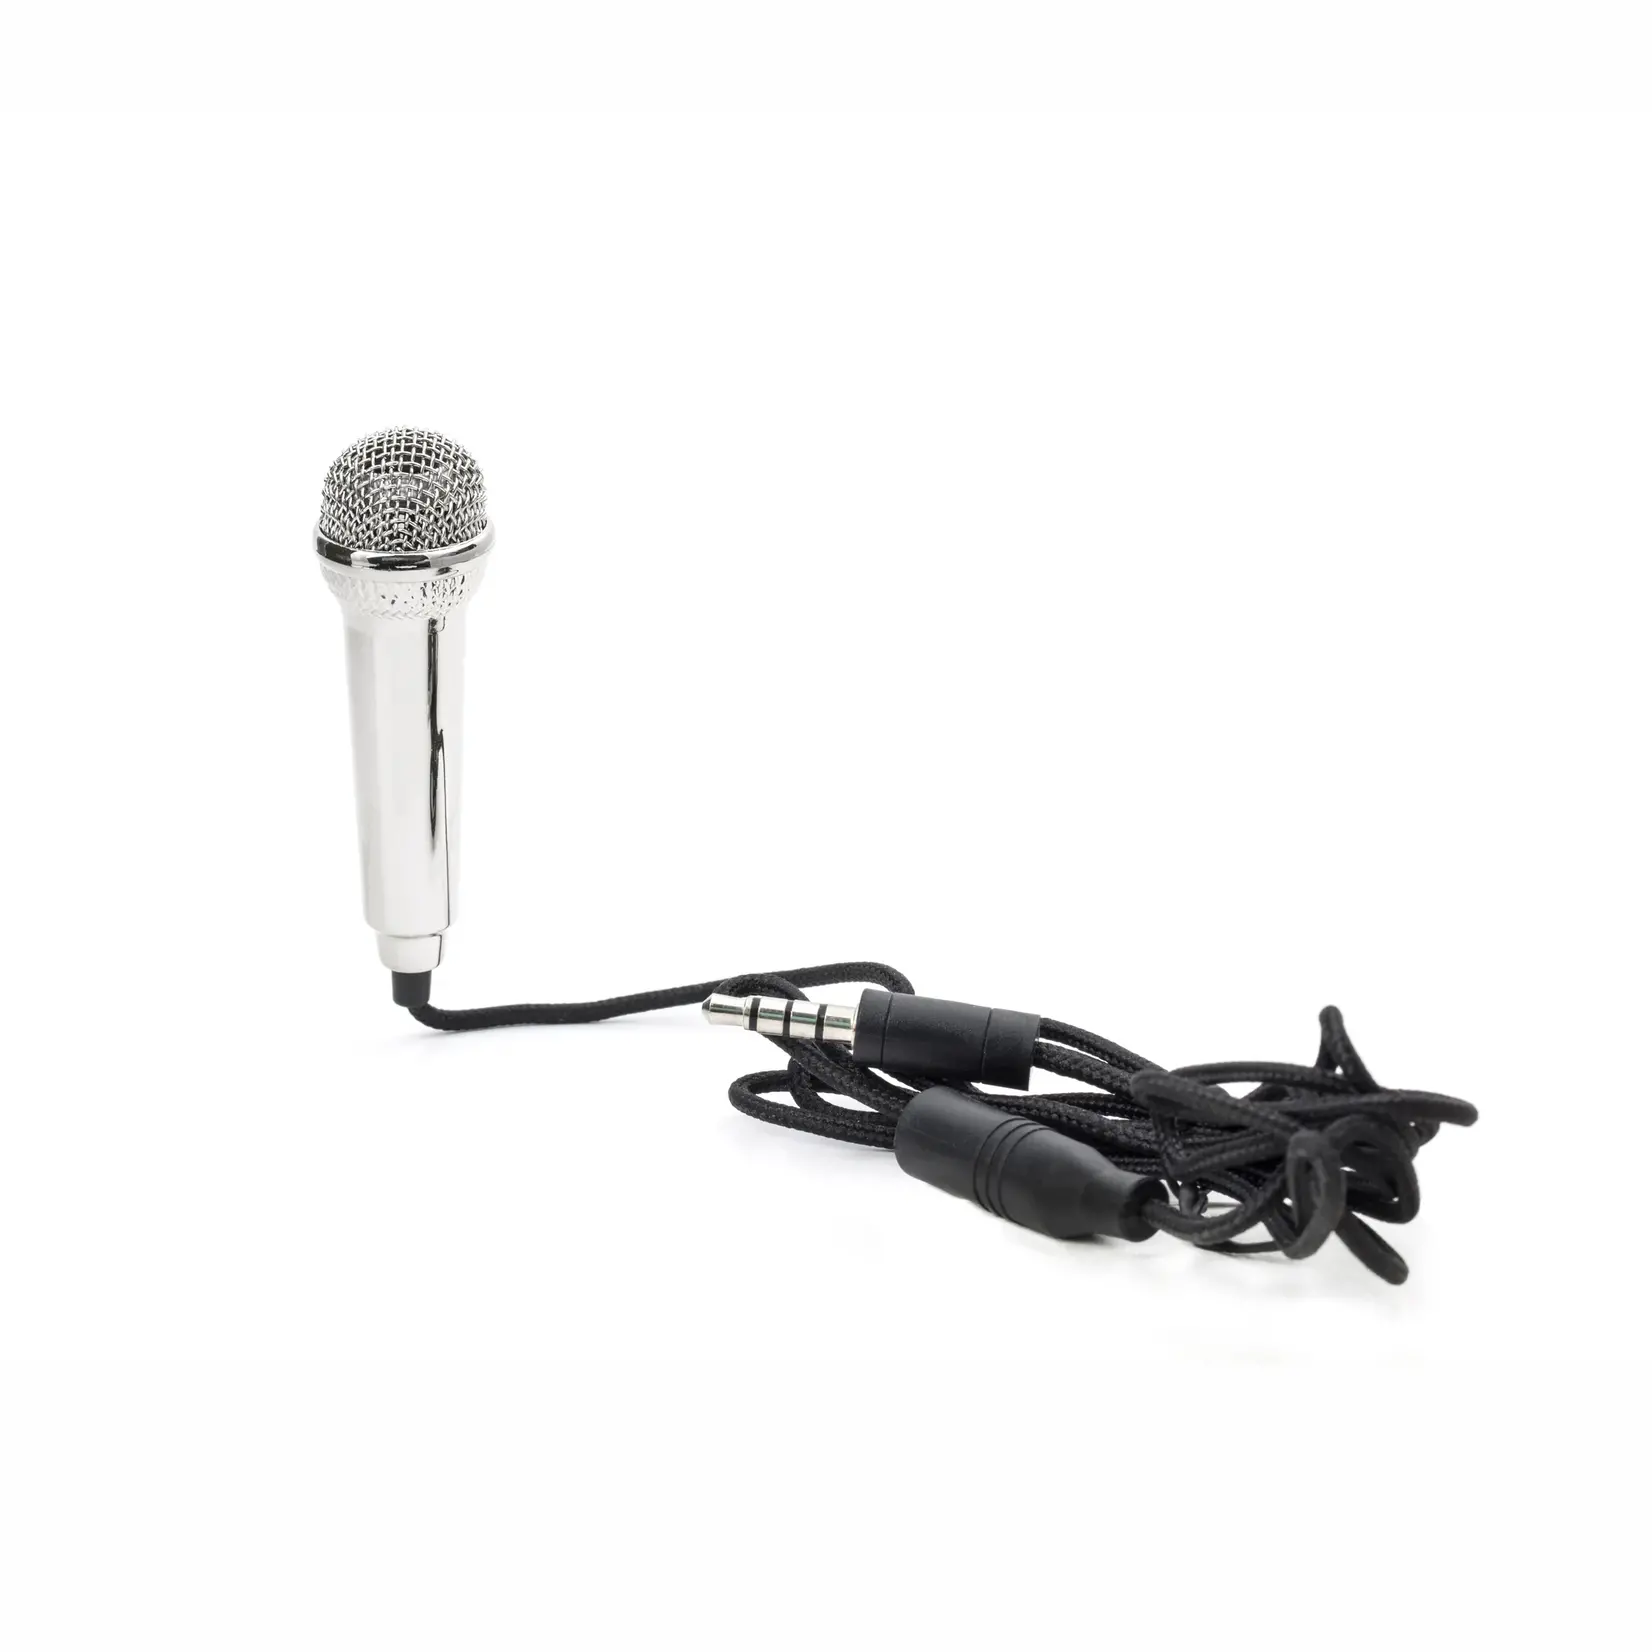 Mini Karaoke Microphone-Silver